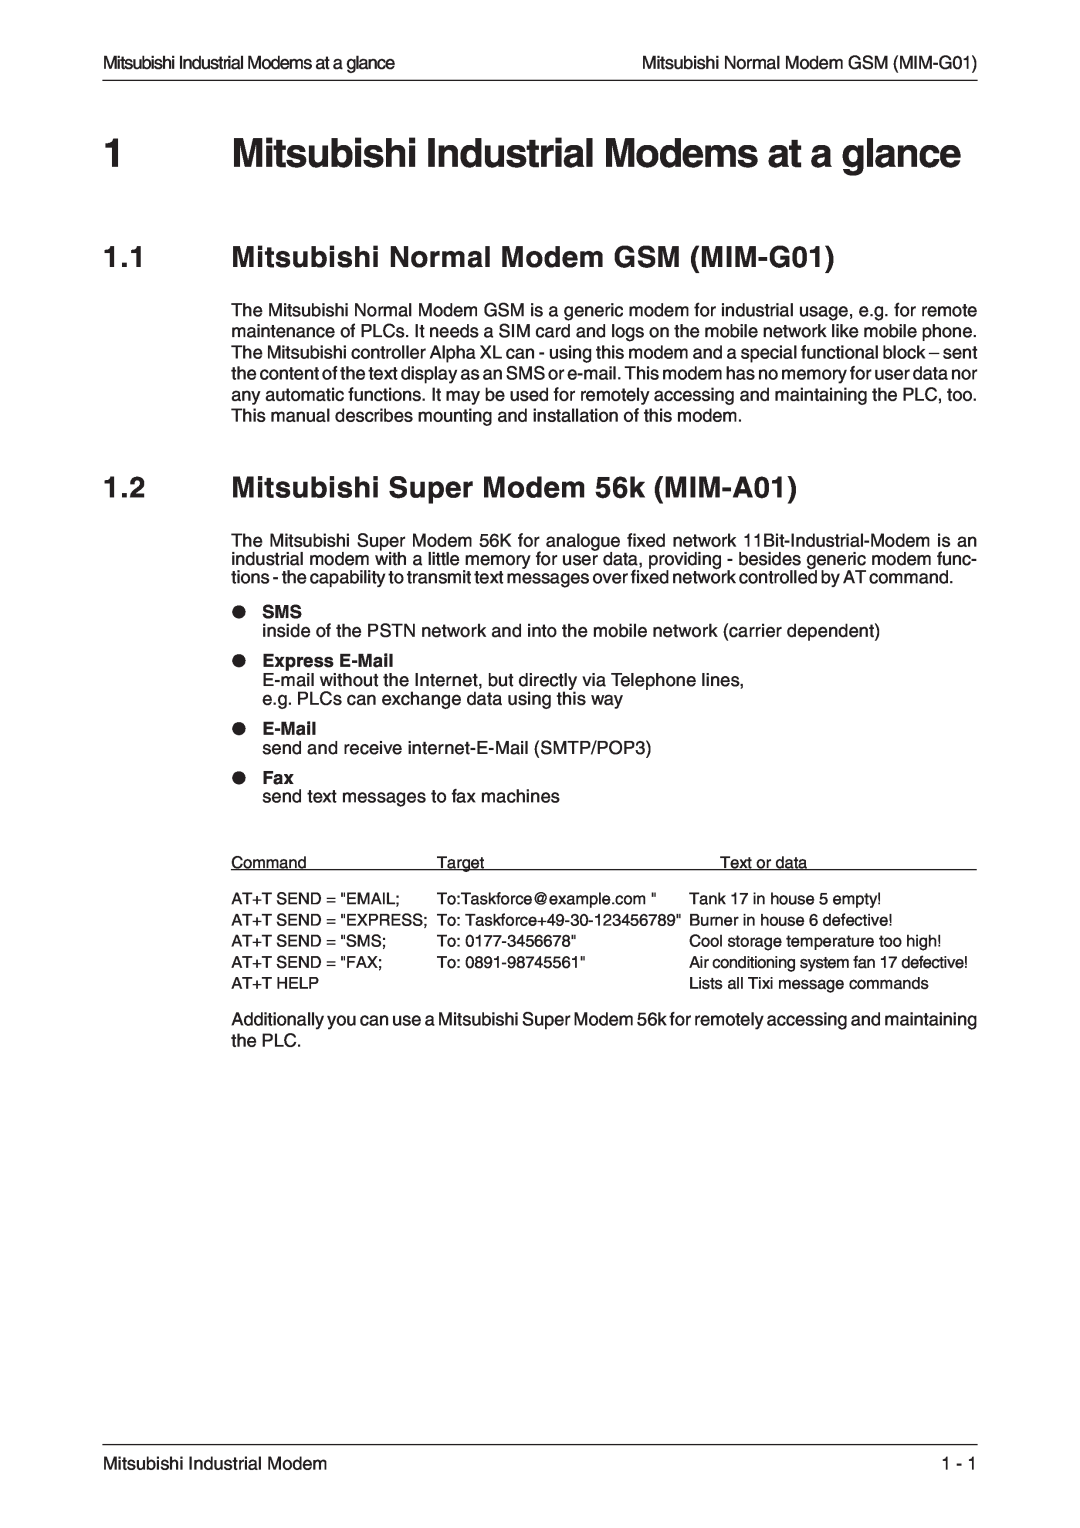 Mitsubishi Electronics Mitsubishi Industrial Modems at a glance, Mitsubishi Normal Modem GSM MIM-G01, Express E-Mail 